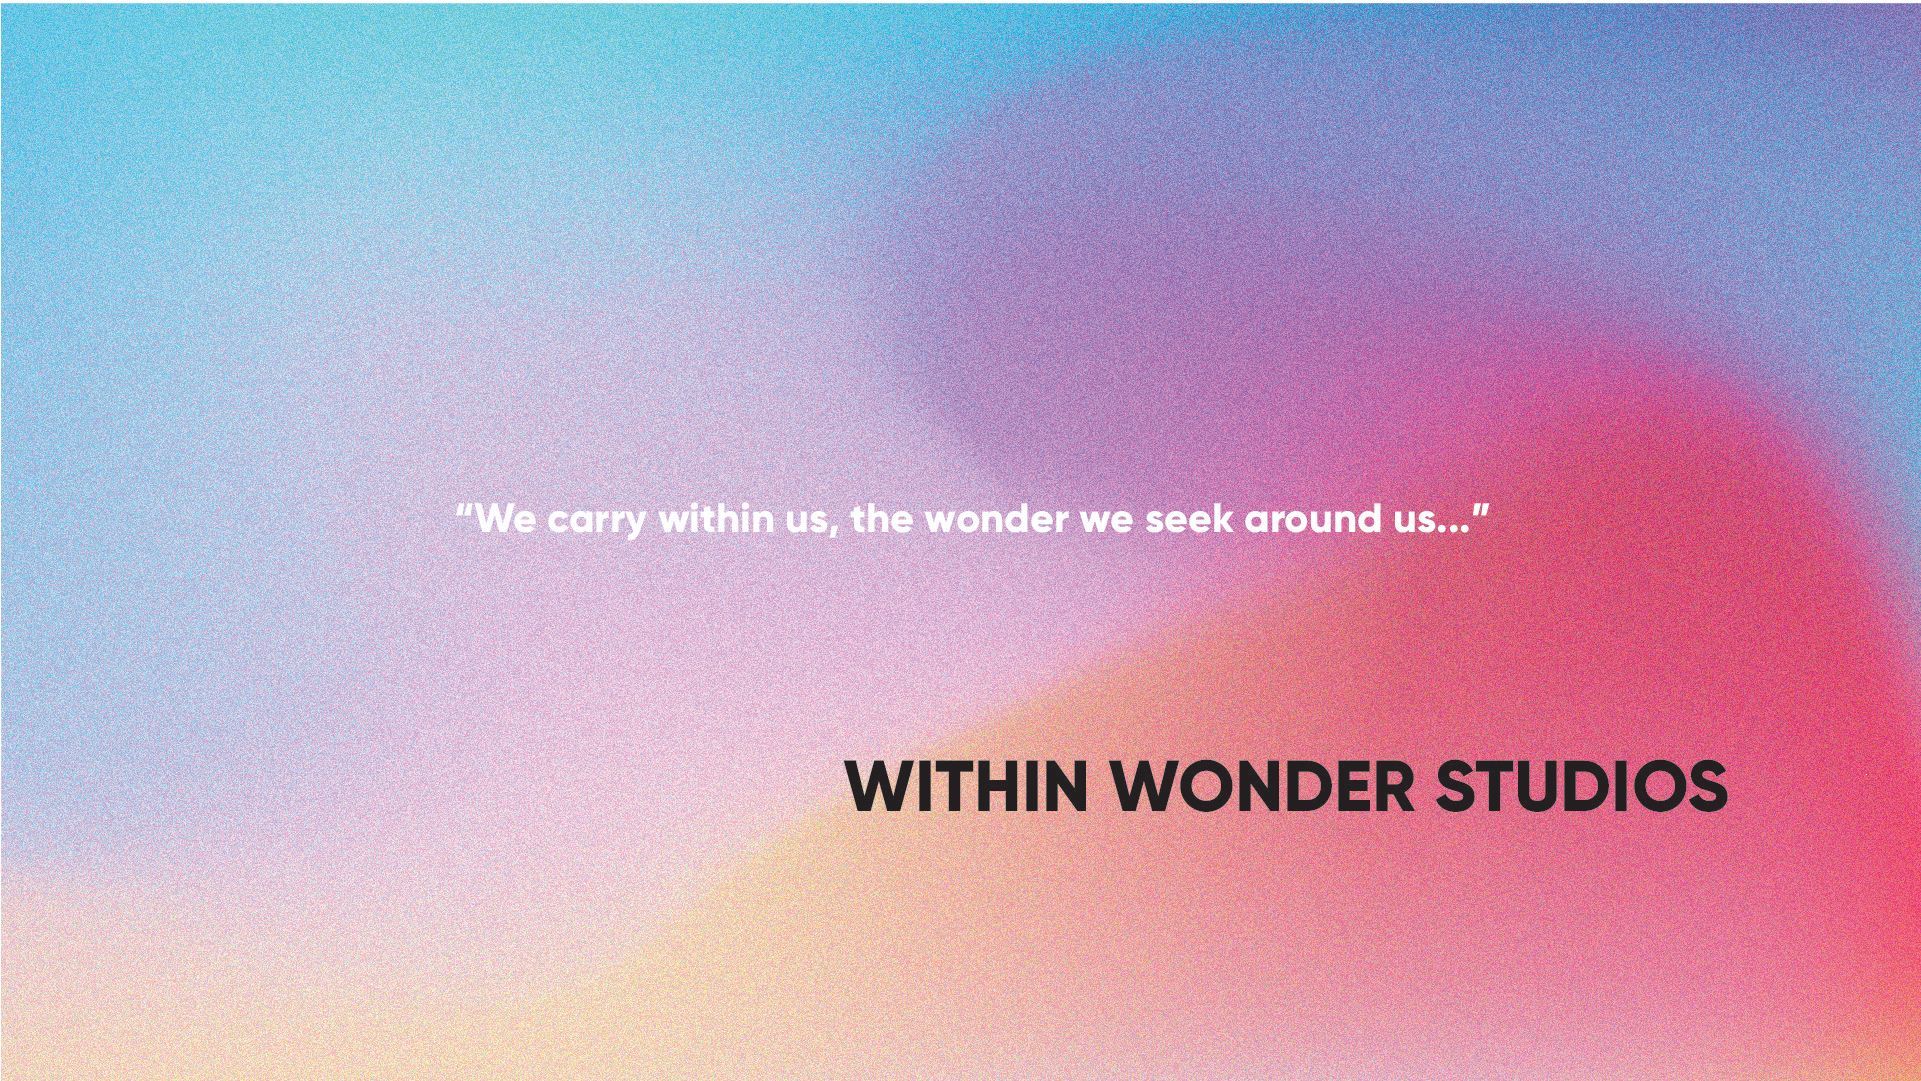 Within Wonder Studios